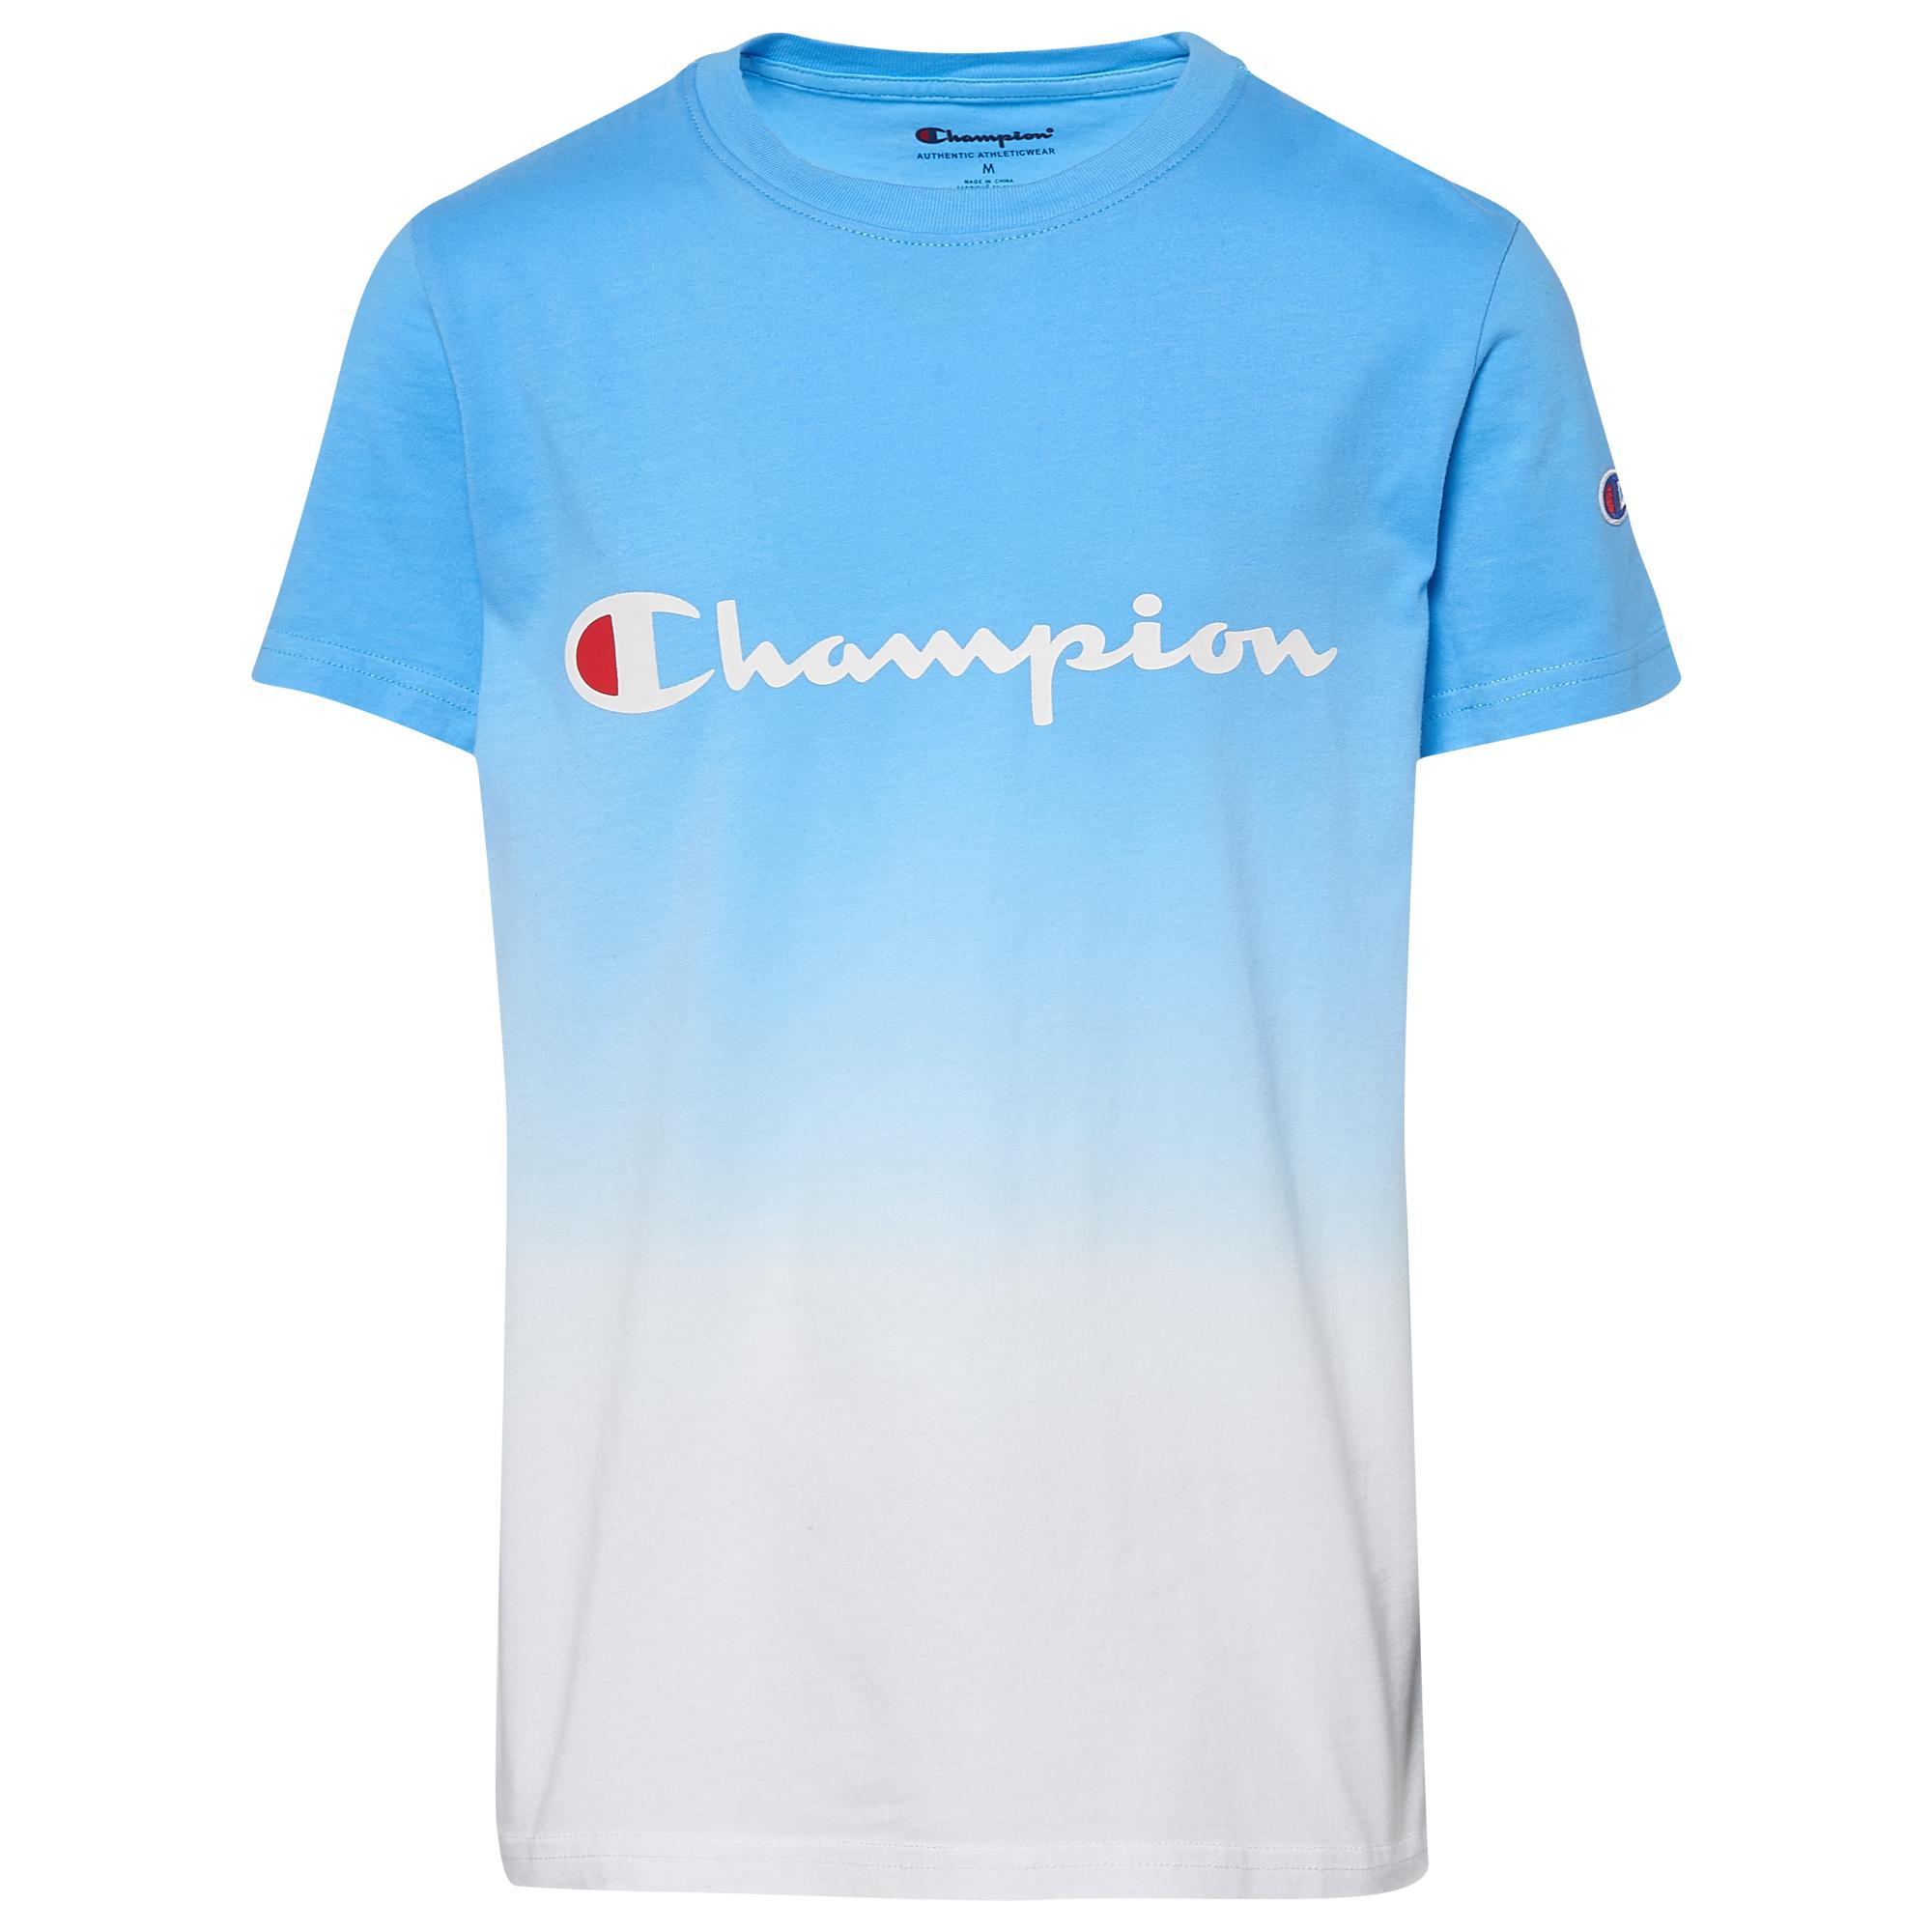 champion shirt blue and white